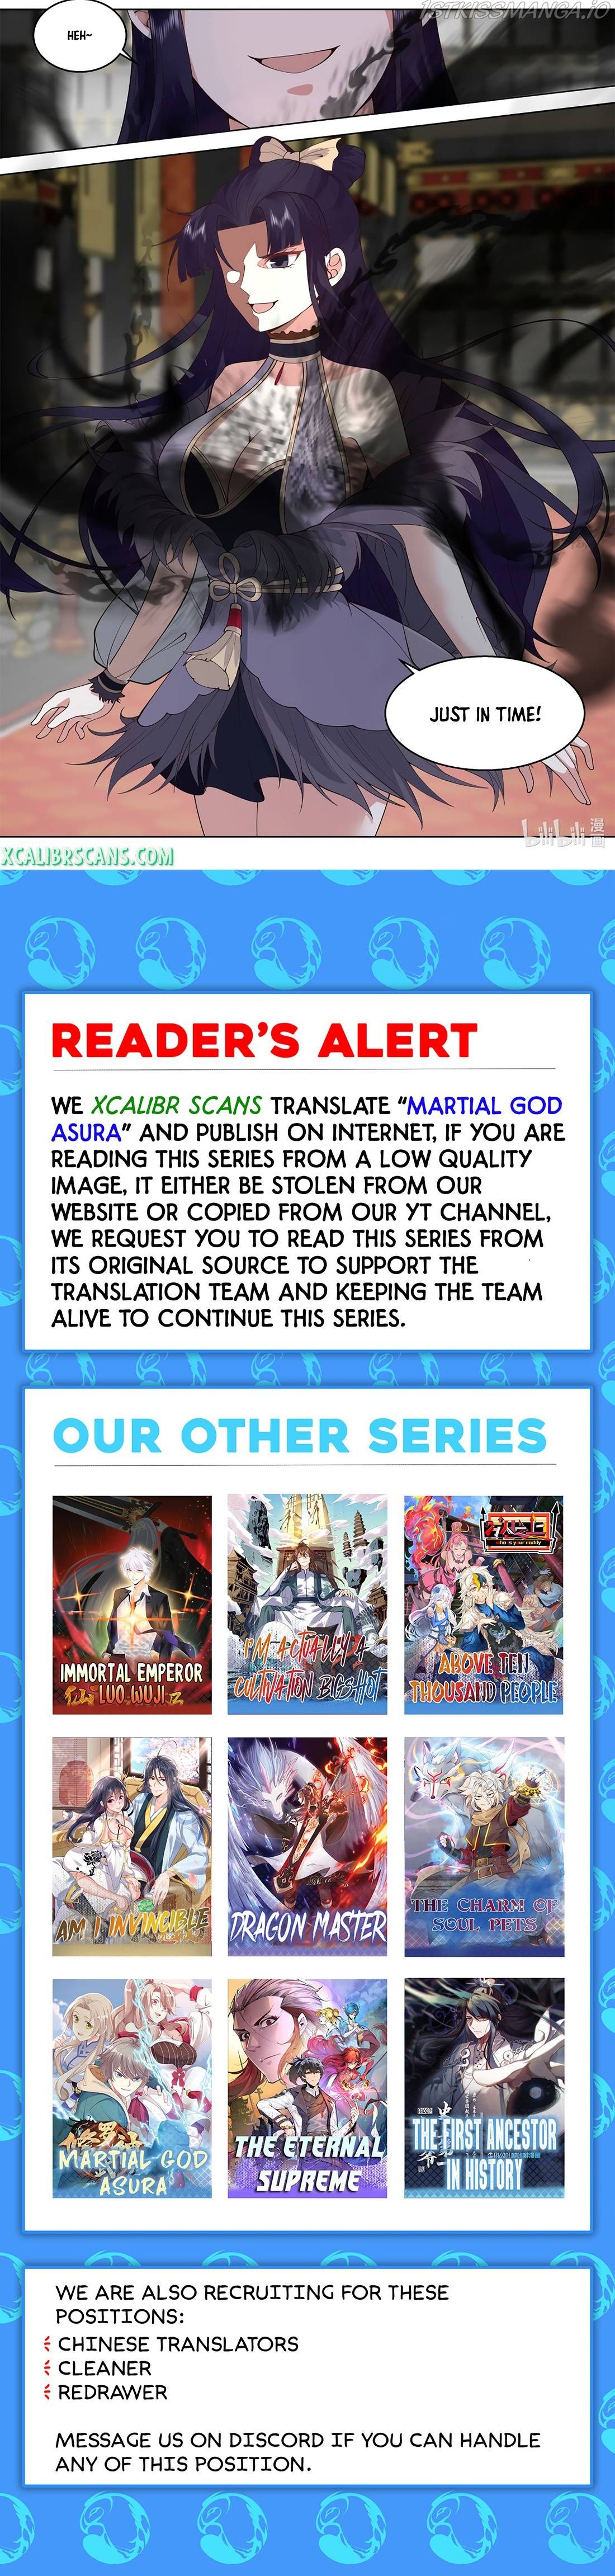 Martial God Asura Chapter 504 - Page 9